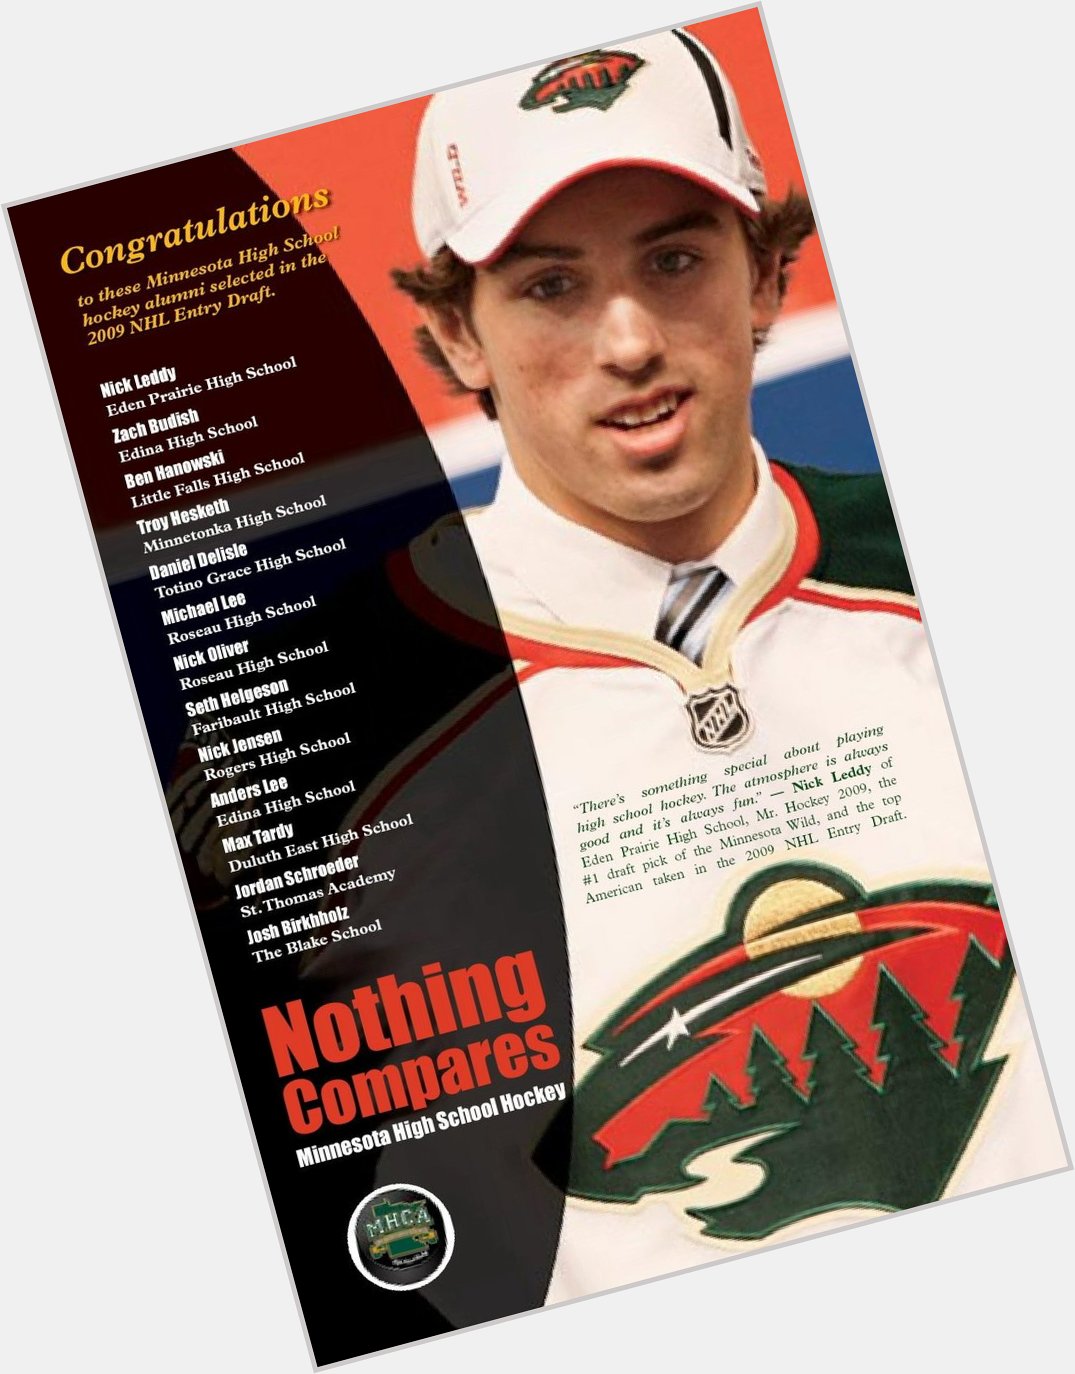 Happy 27th birthday today to NHL defenseman - Nick Leddy born in Eden Prairie, MN 